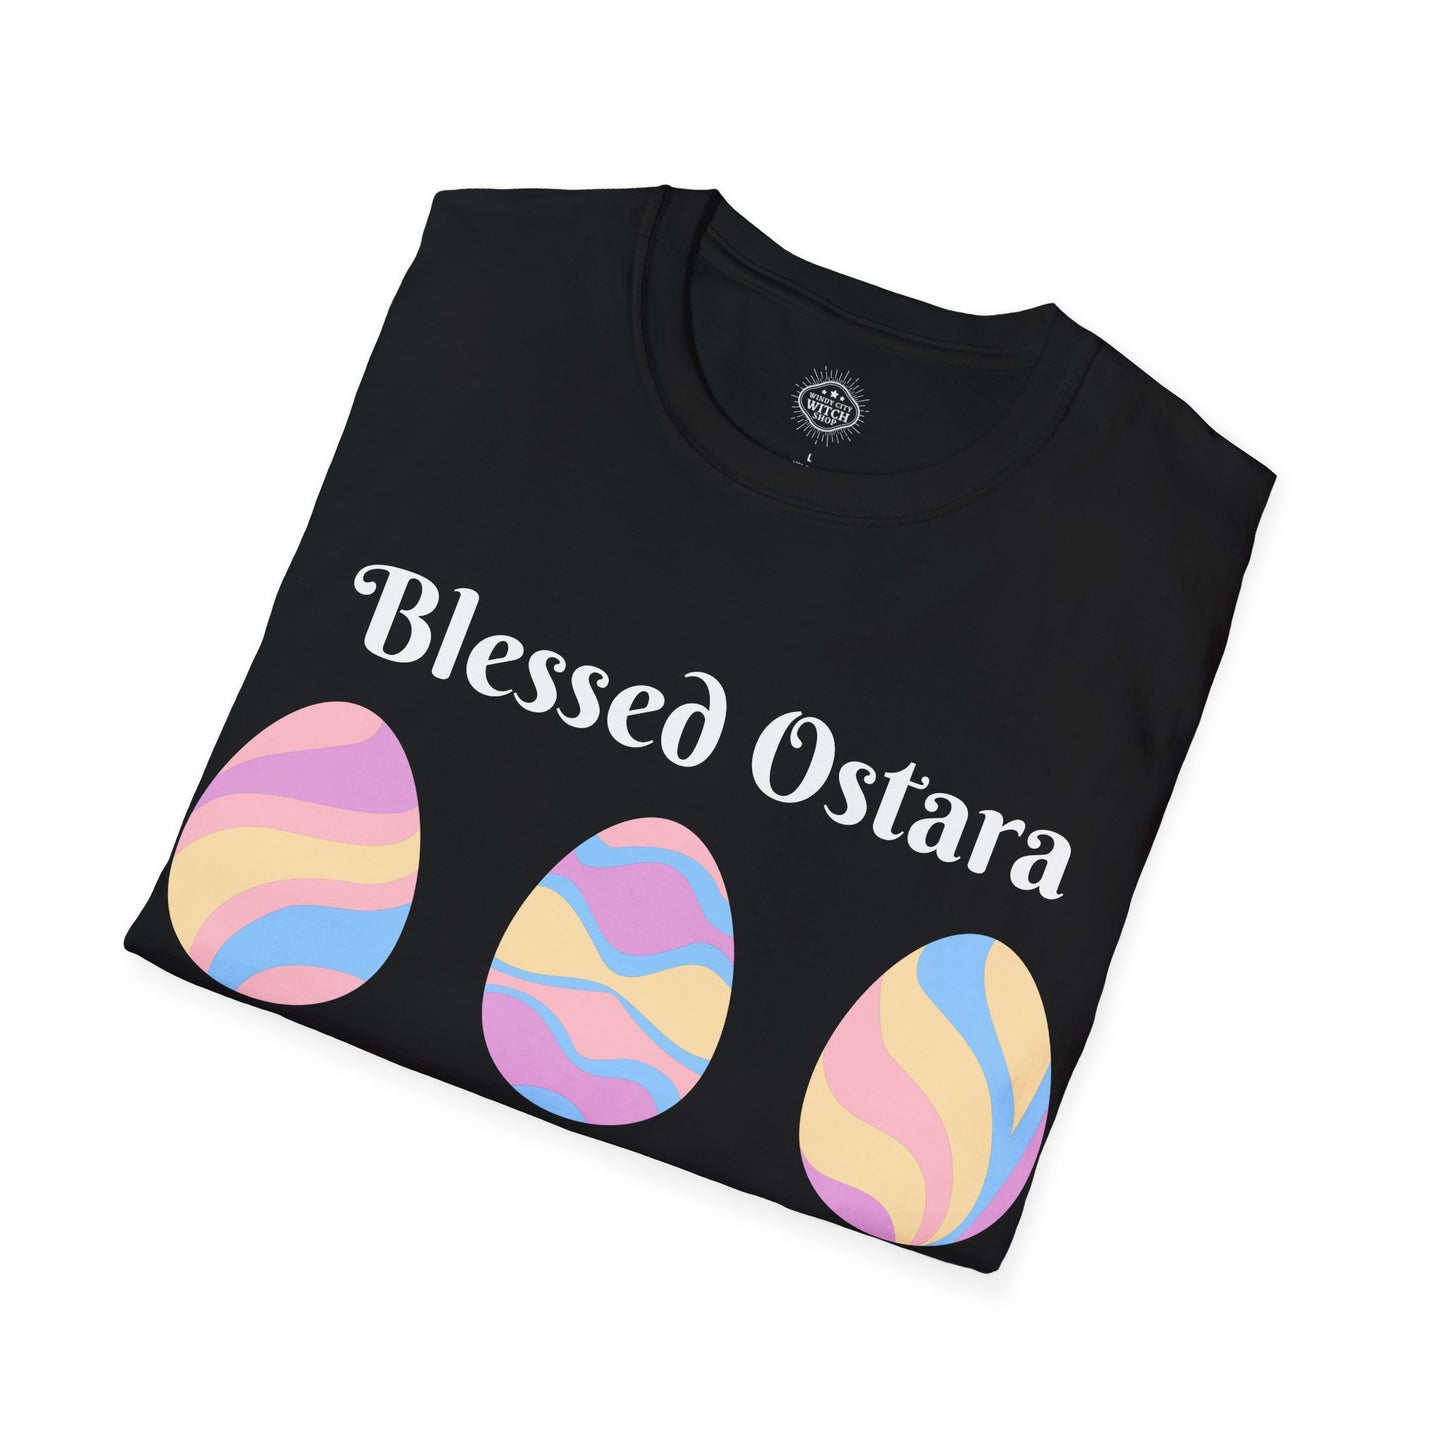 Blessed Ostara Unisex T-Shirt